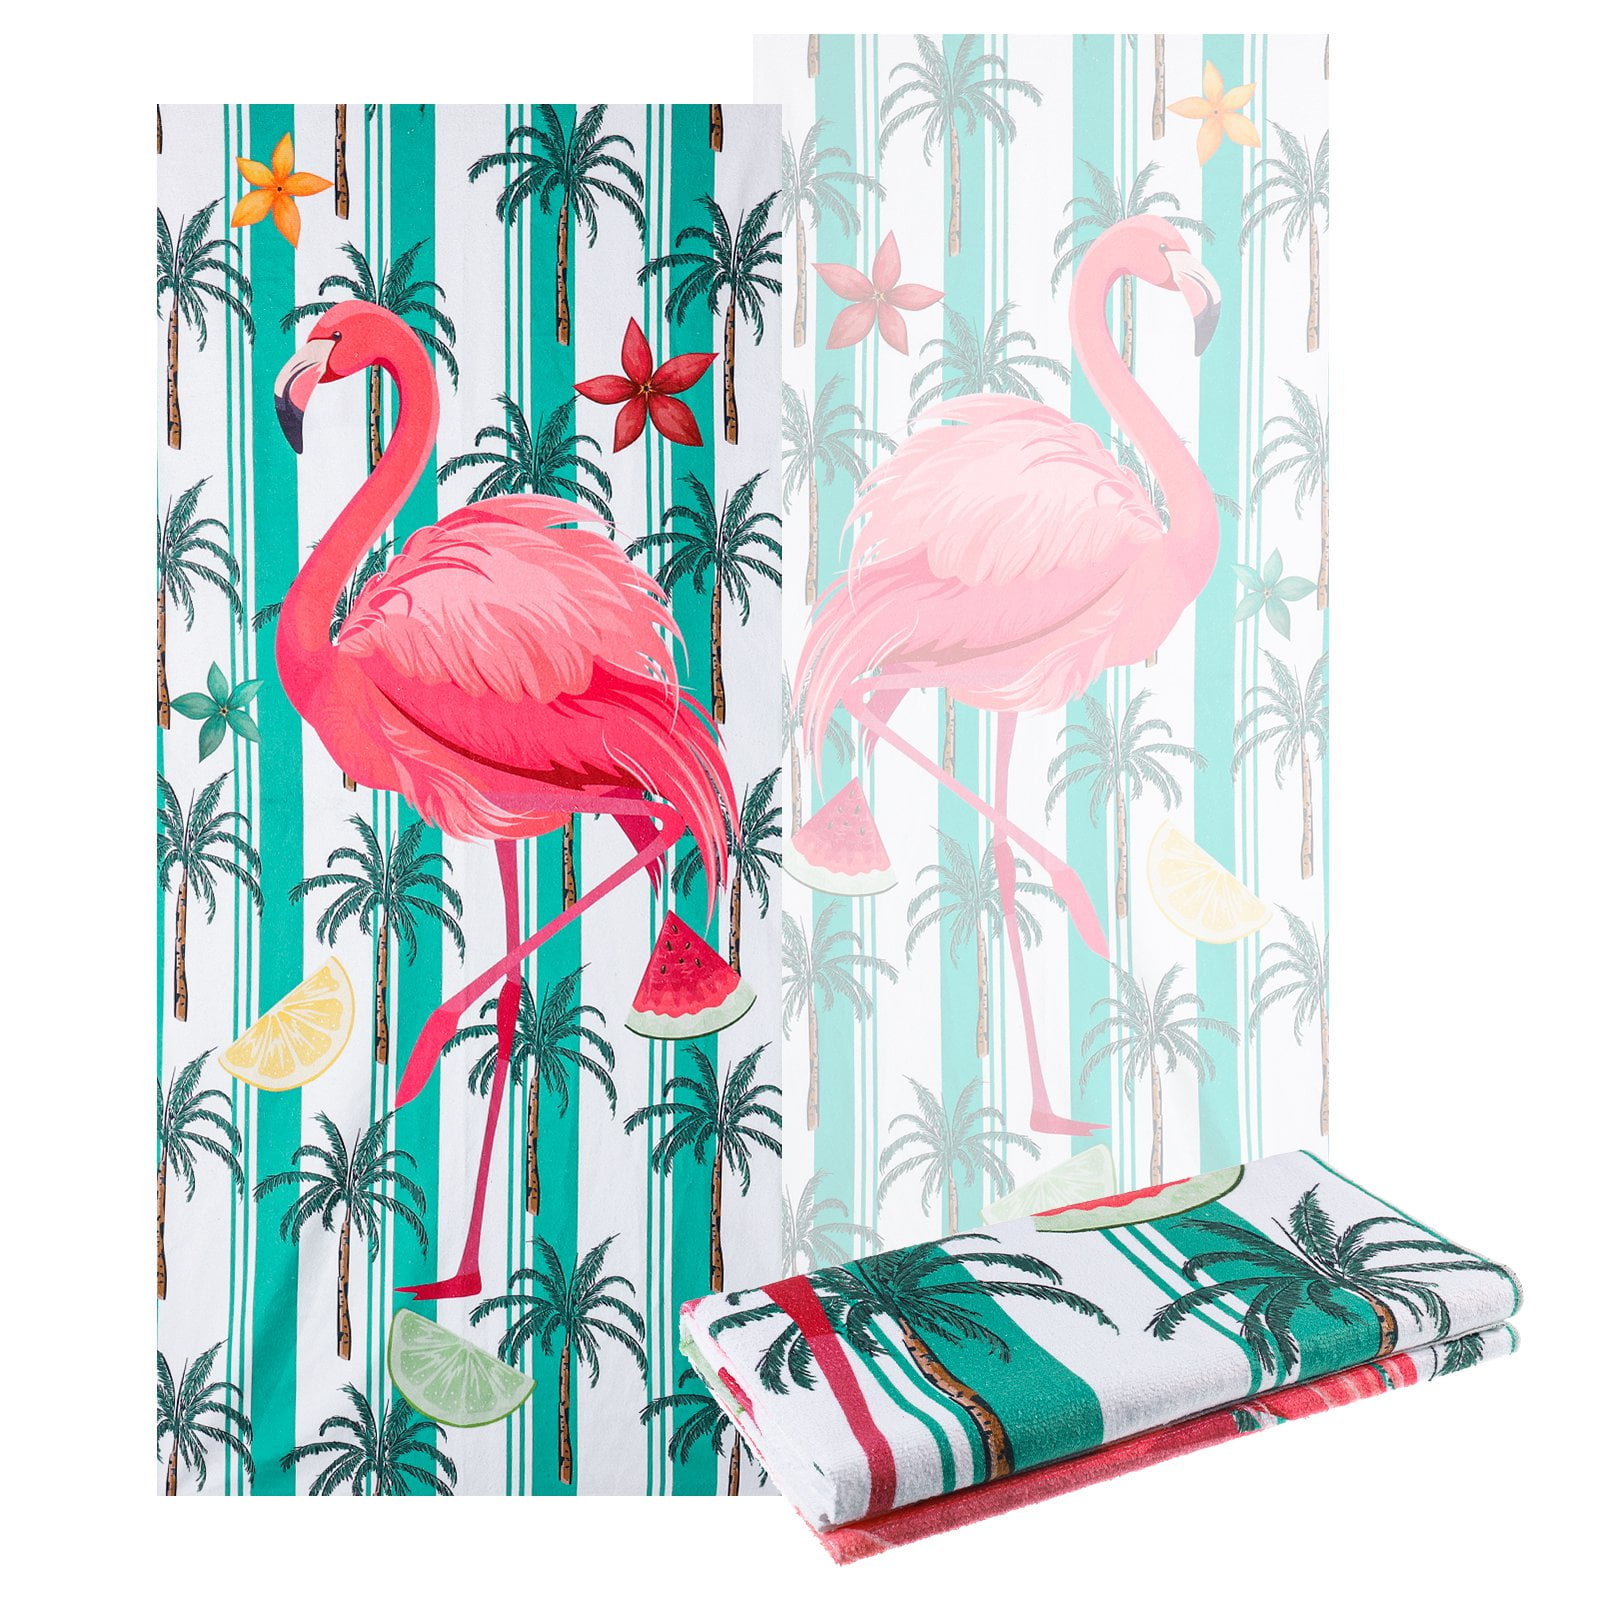 Surfing California Palm Trees Pineapple Flamingo Bath Swim Beach Towel Blanket 